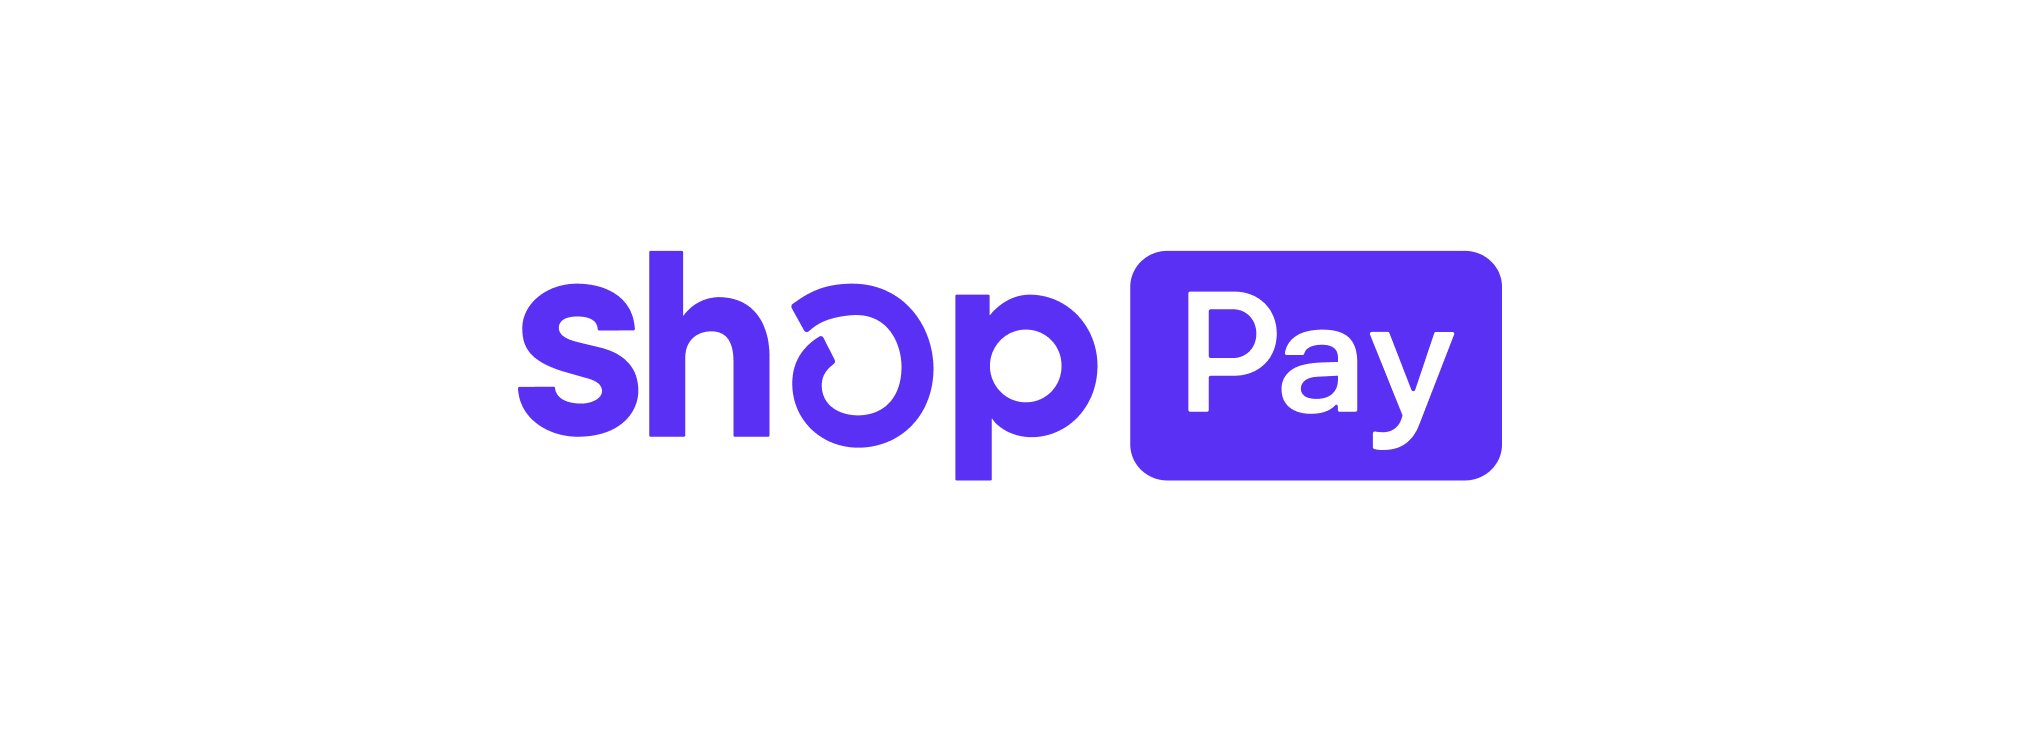 Temel Shop Pay logosu